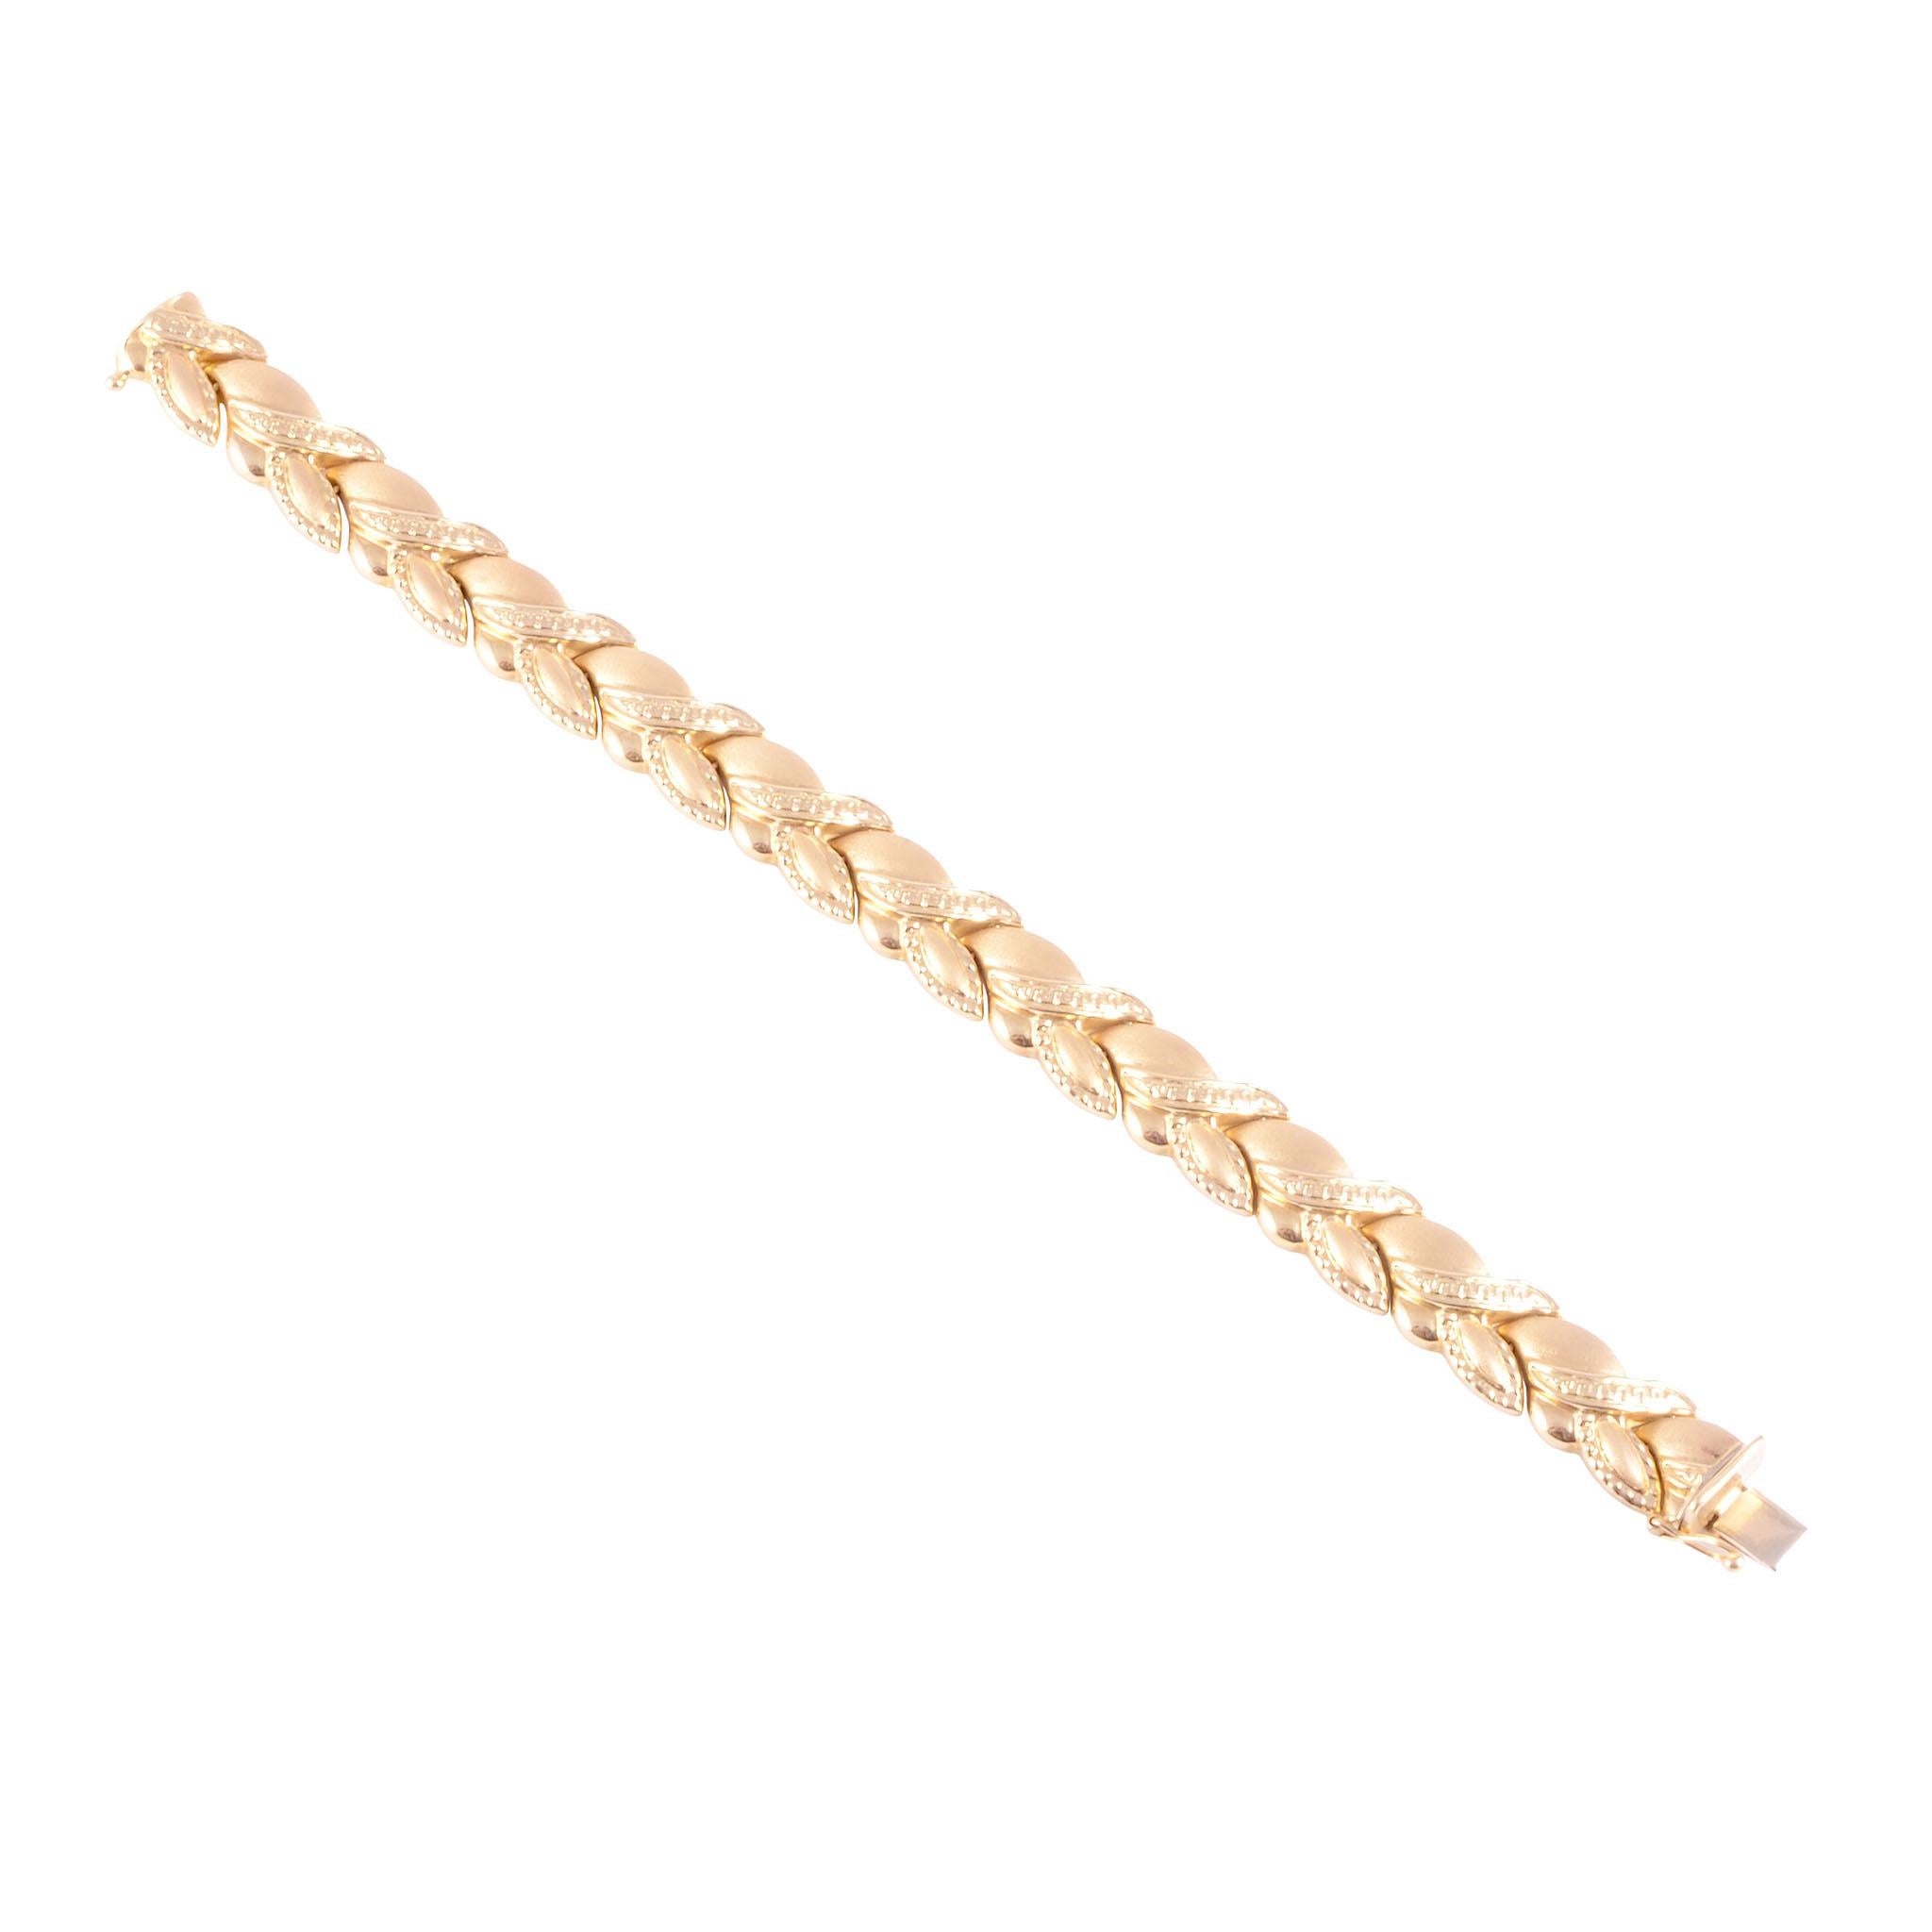 Estate Turkish leaf motif 18K bracelet. This Turkish gold bracelet is crafted in 18 karat yellow gold with a leaf motif. The bracelet weighs 20.3 grams. [SJ 8075 P]

Dimensions
7.25″L